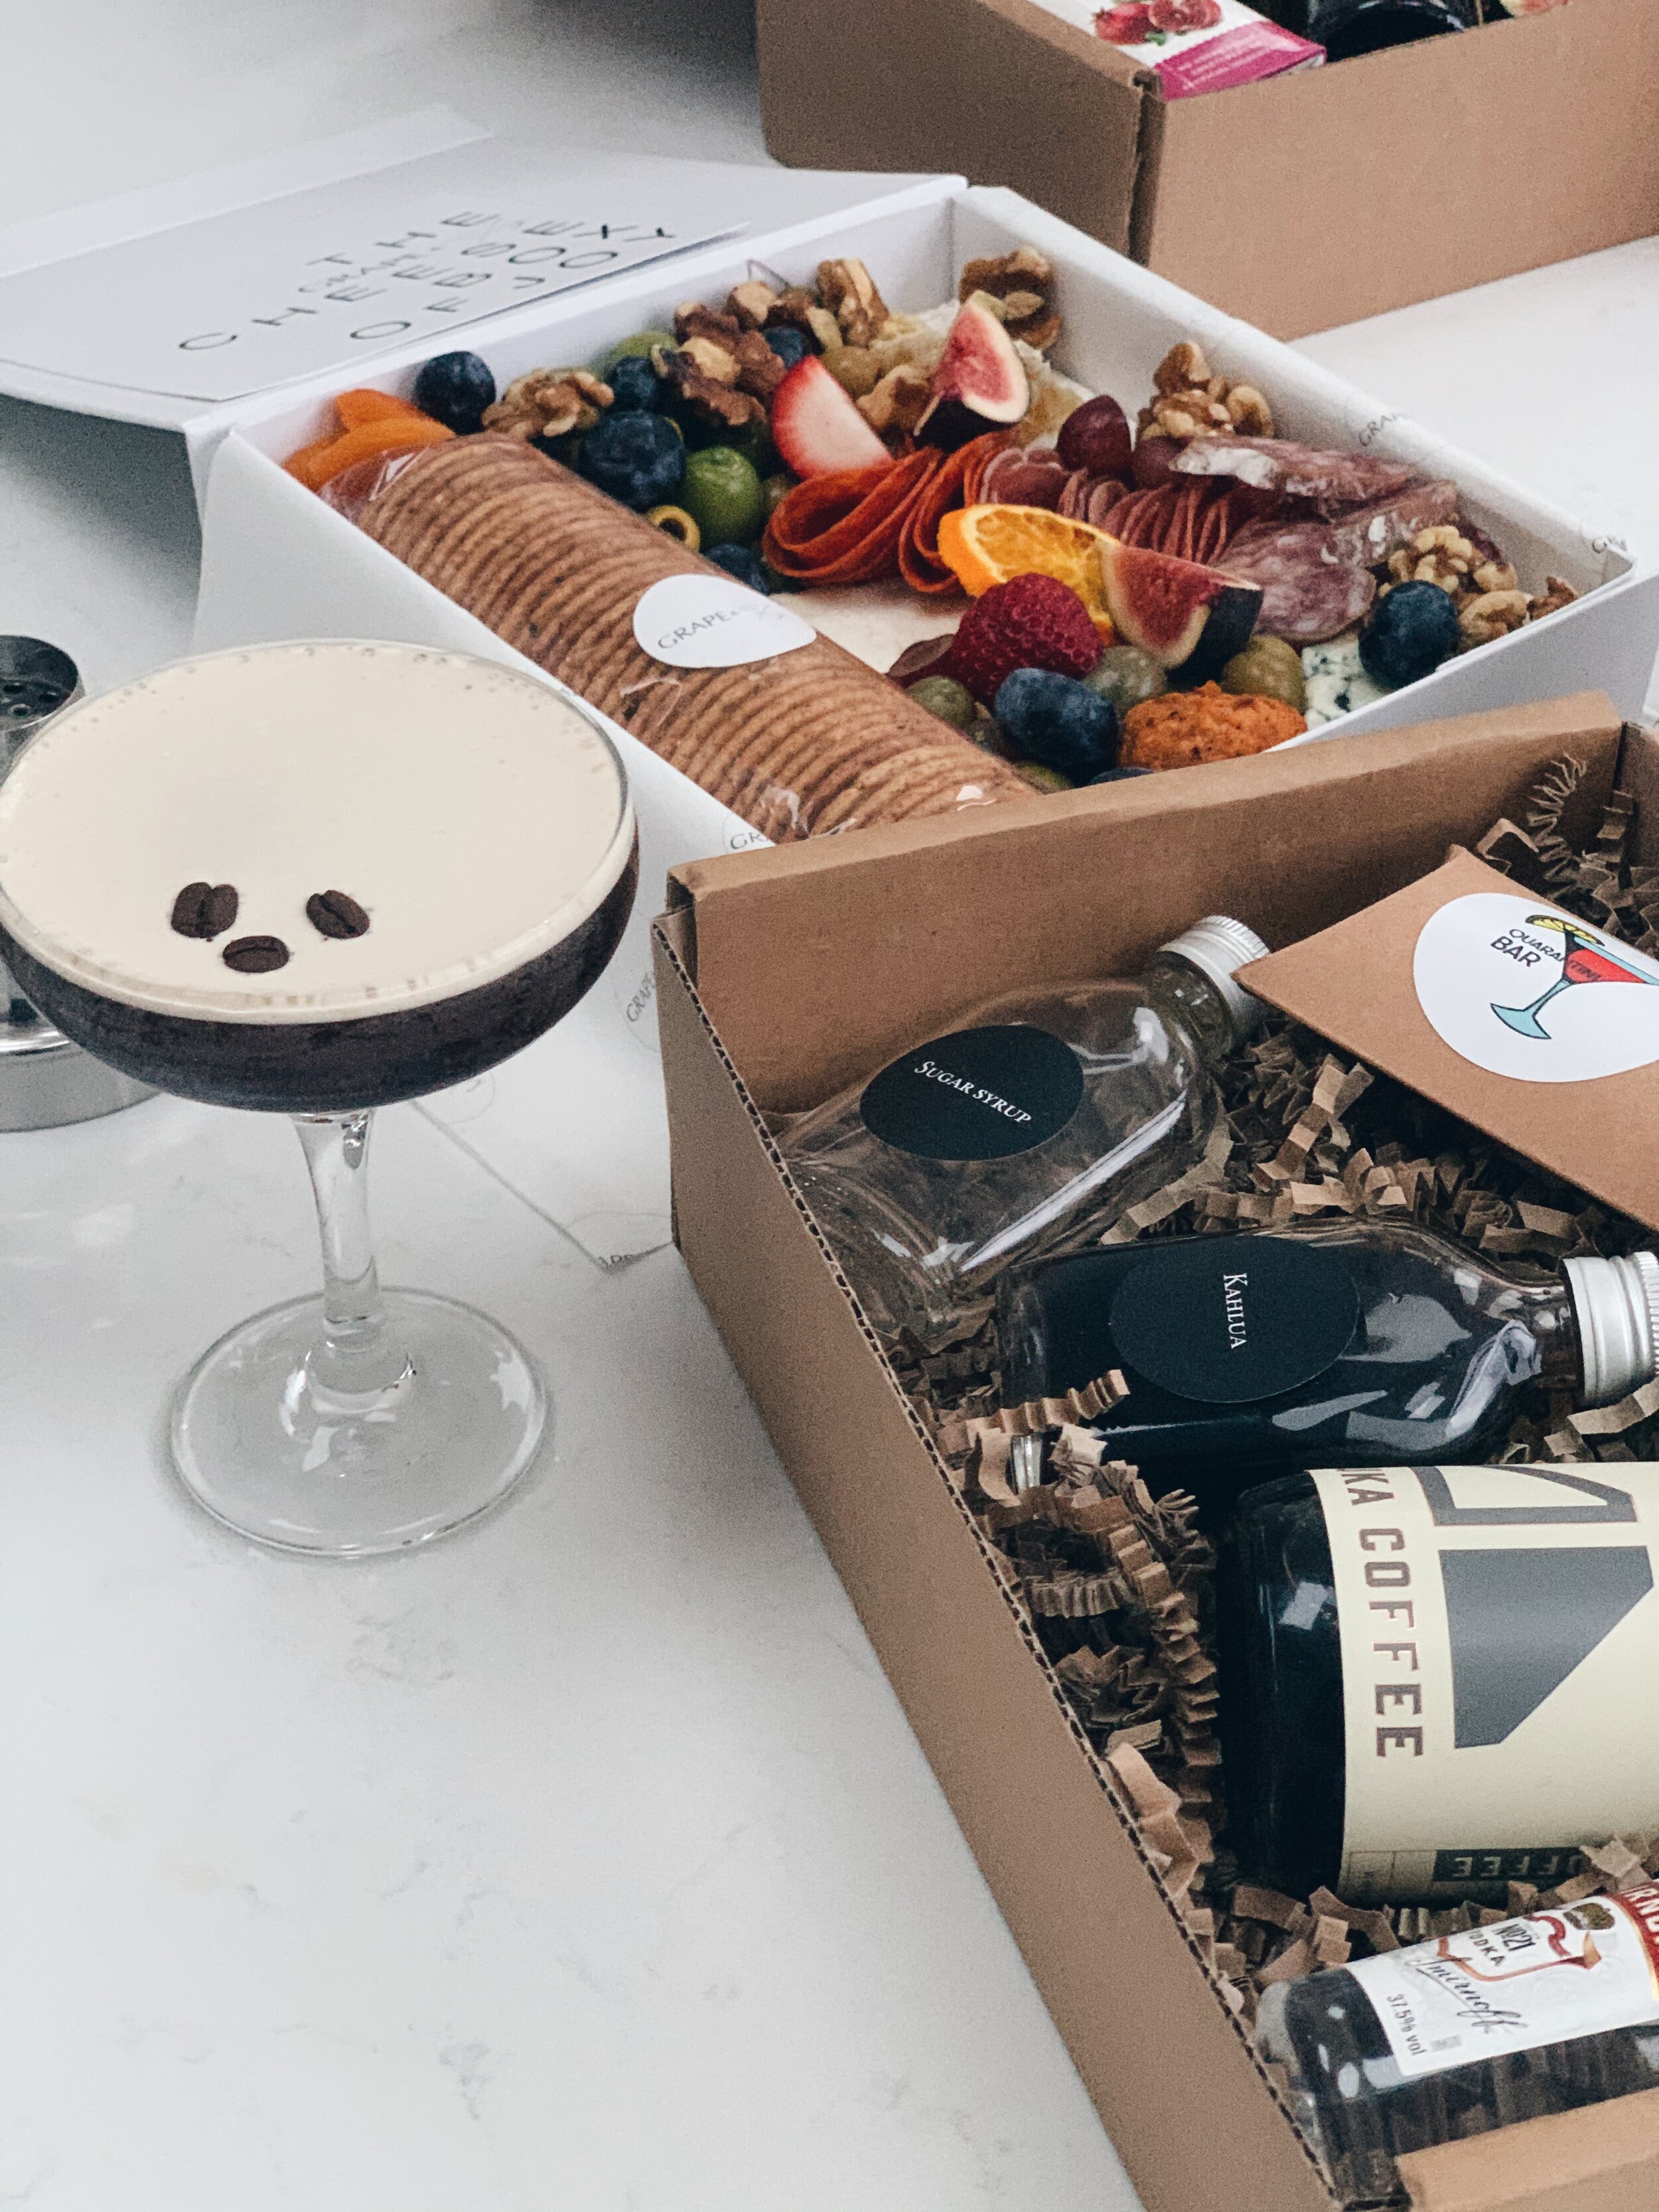 Espresso Martini Cocktail Kit